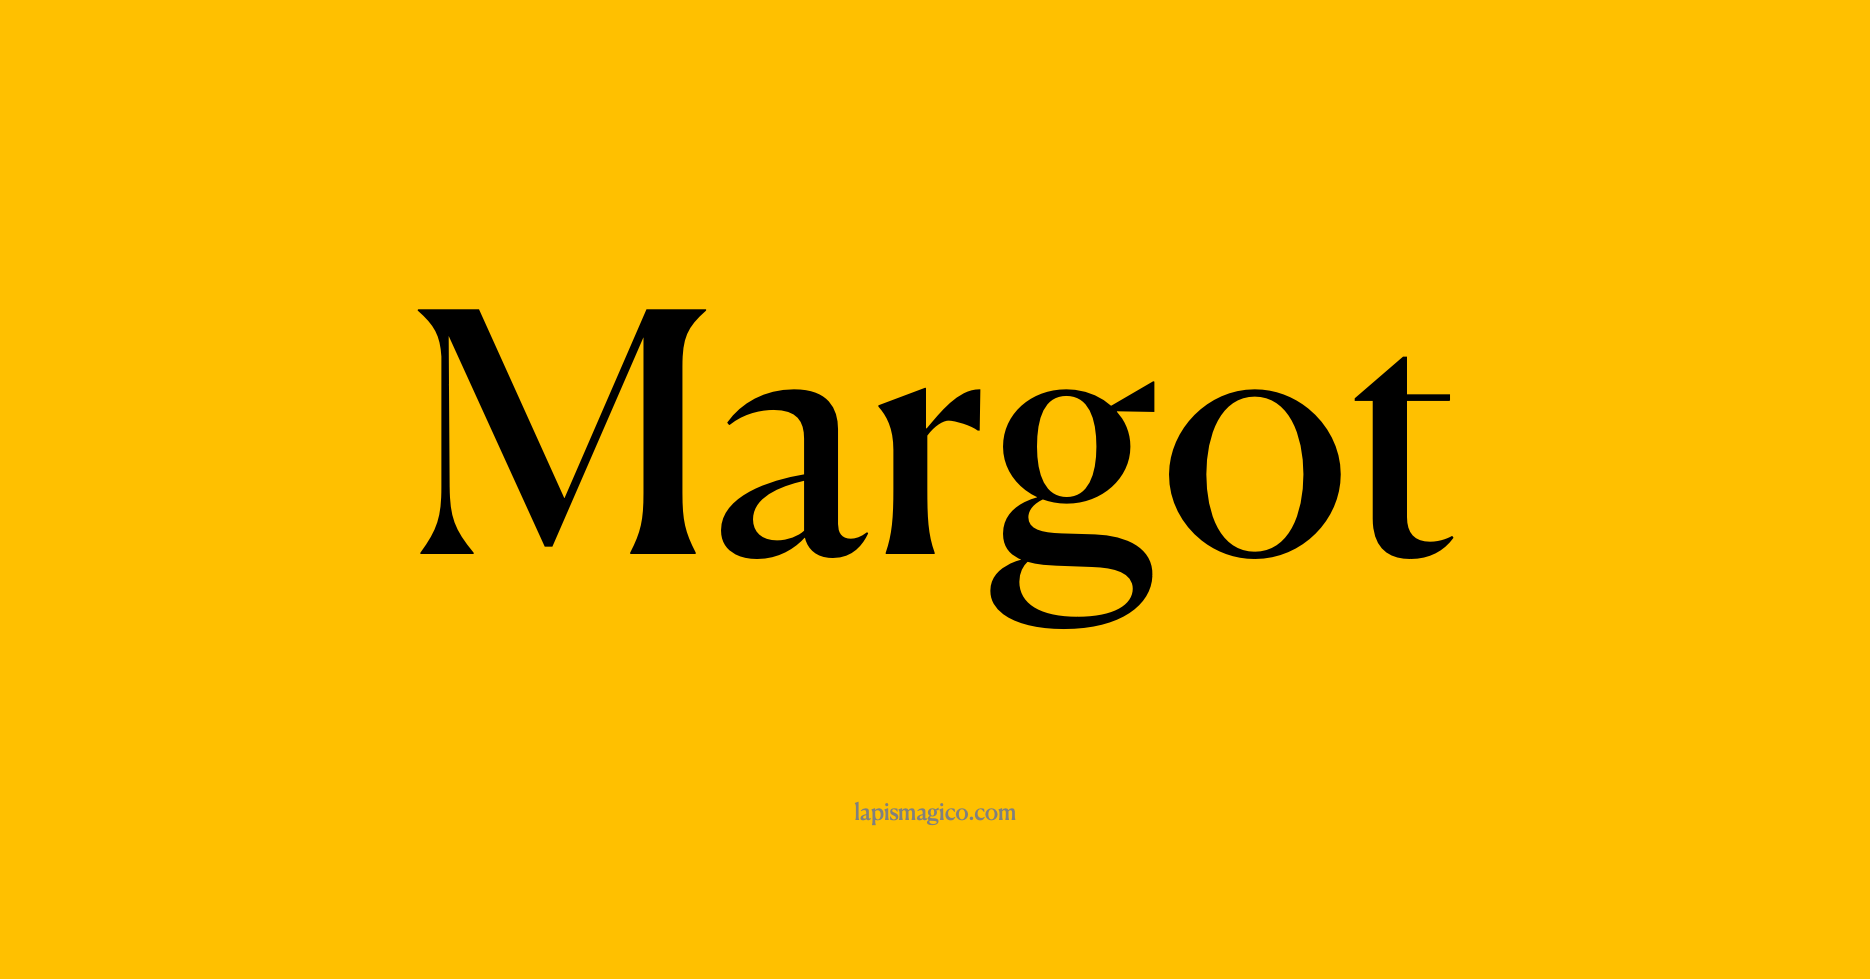 Nome Margot